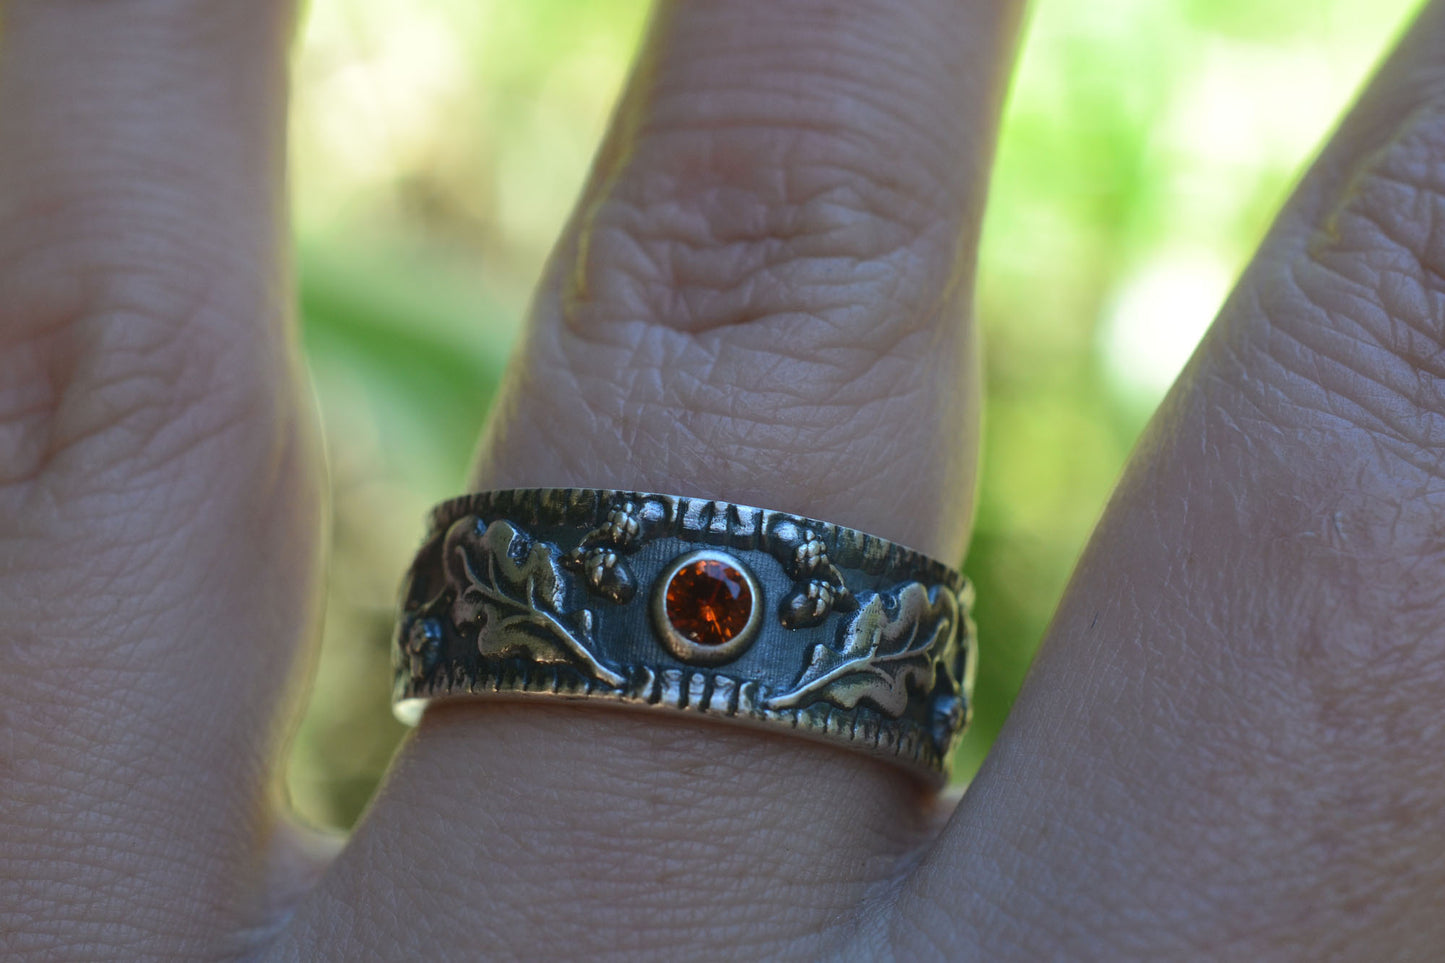 3mm Hessonite Garnet Ring With Acorn Design